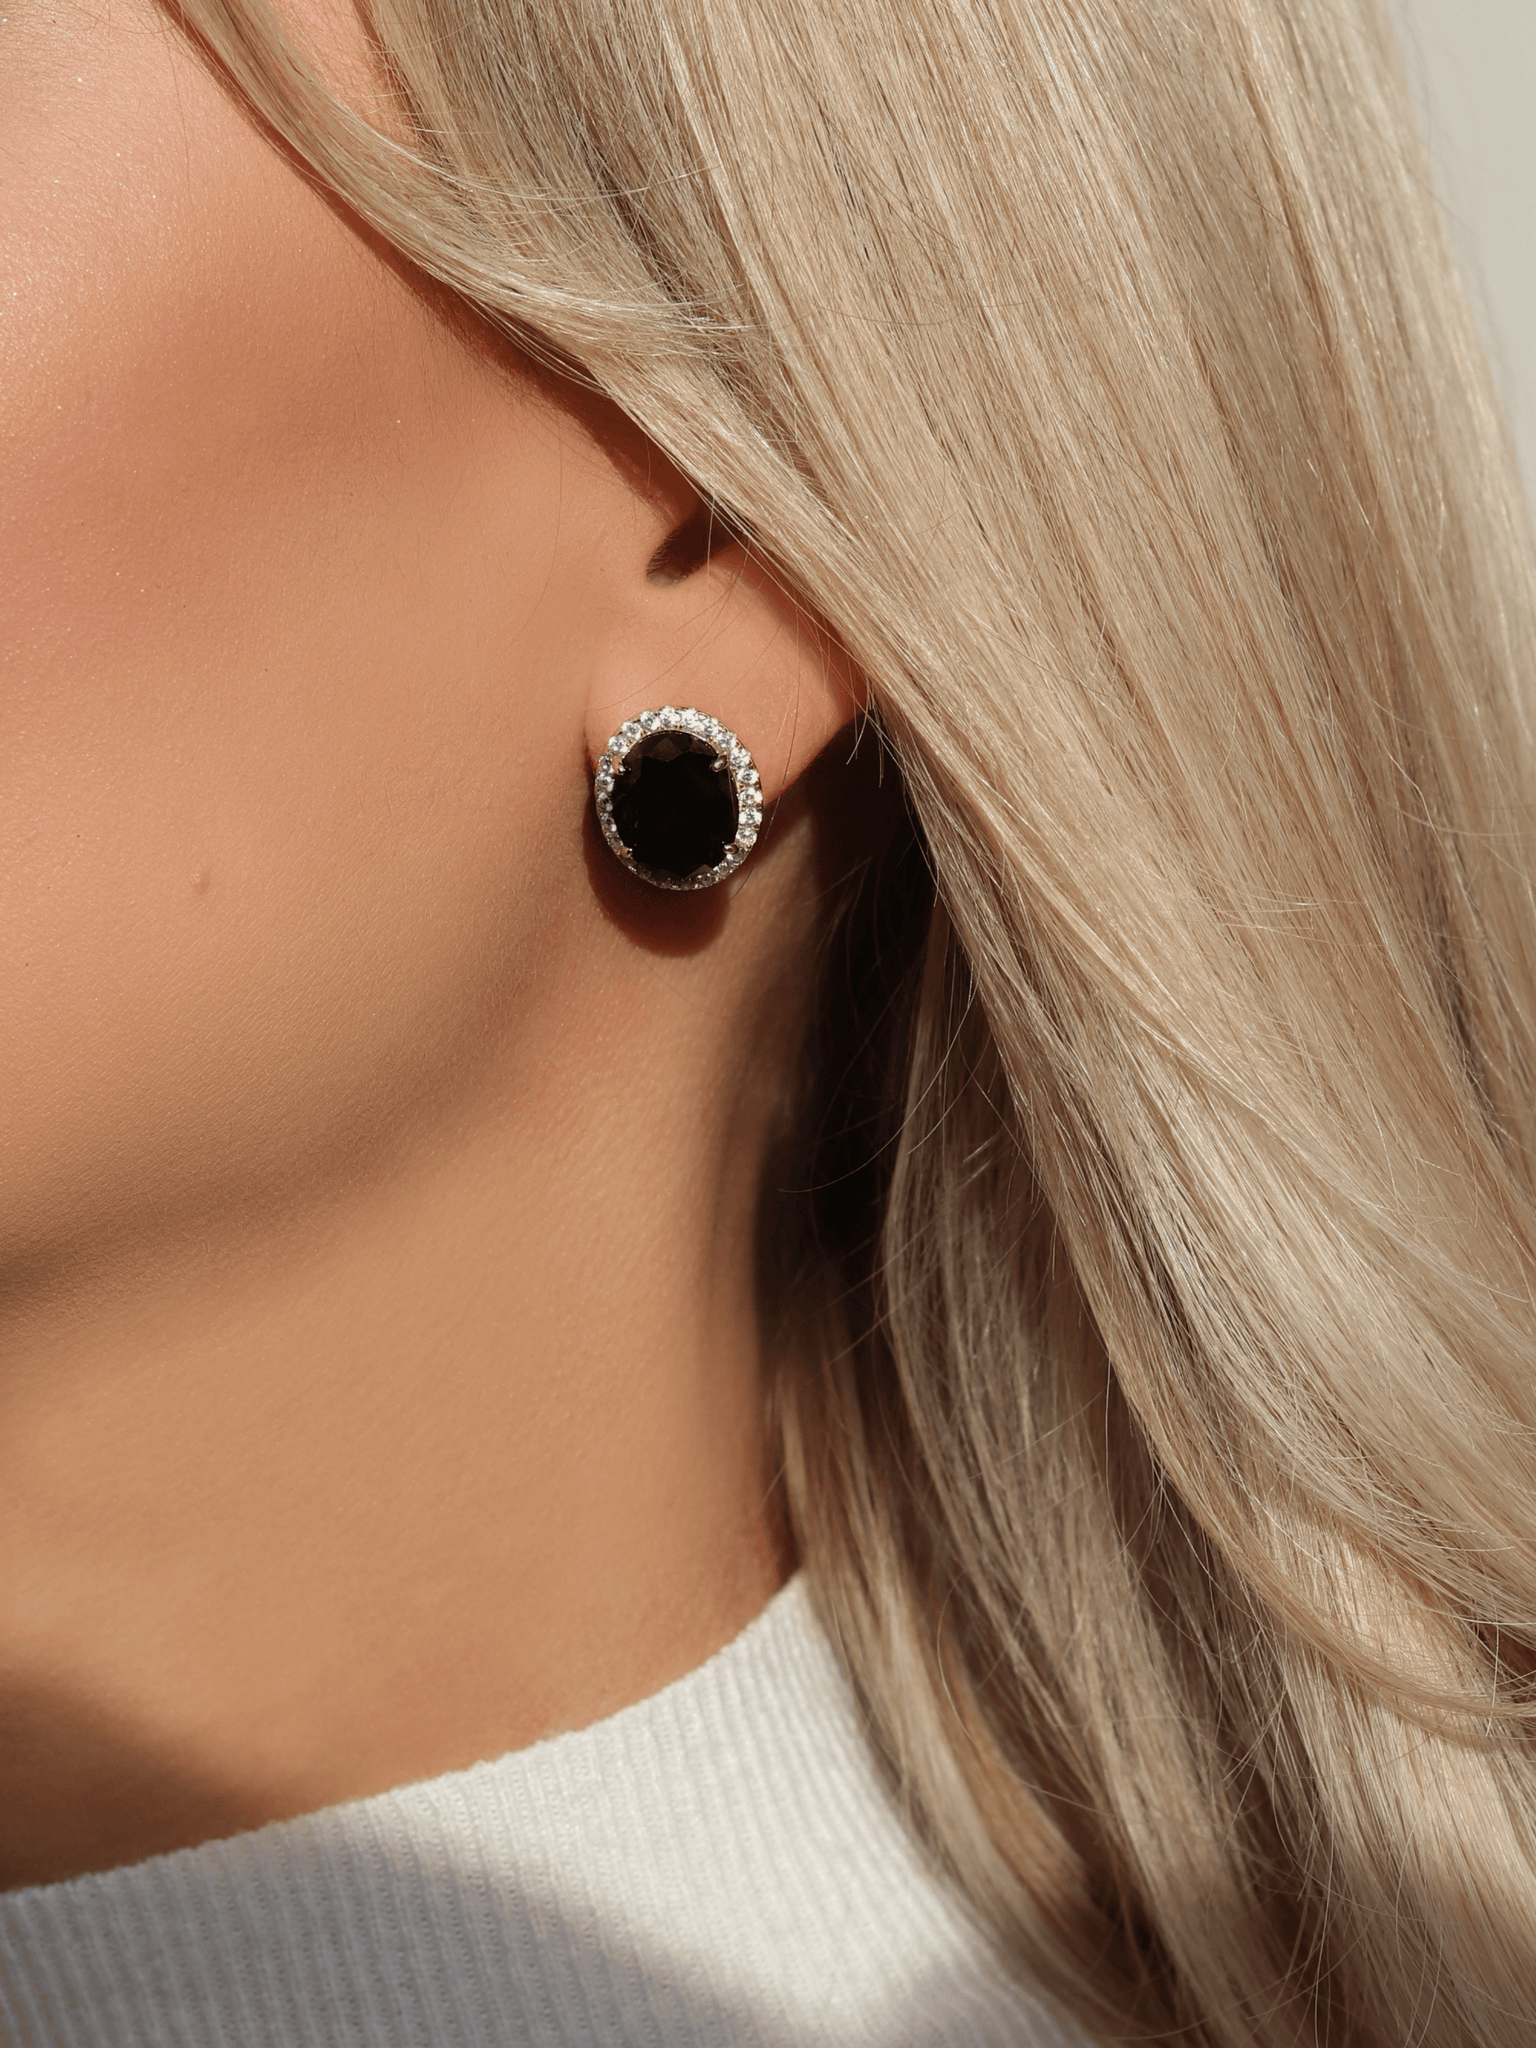 Belle Earrings - Black